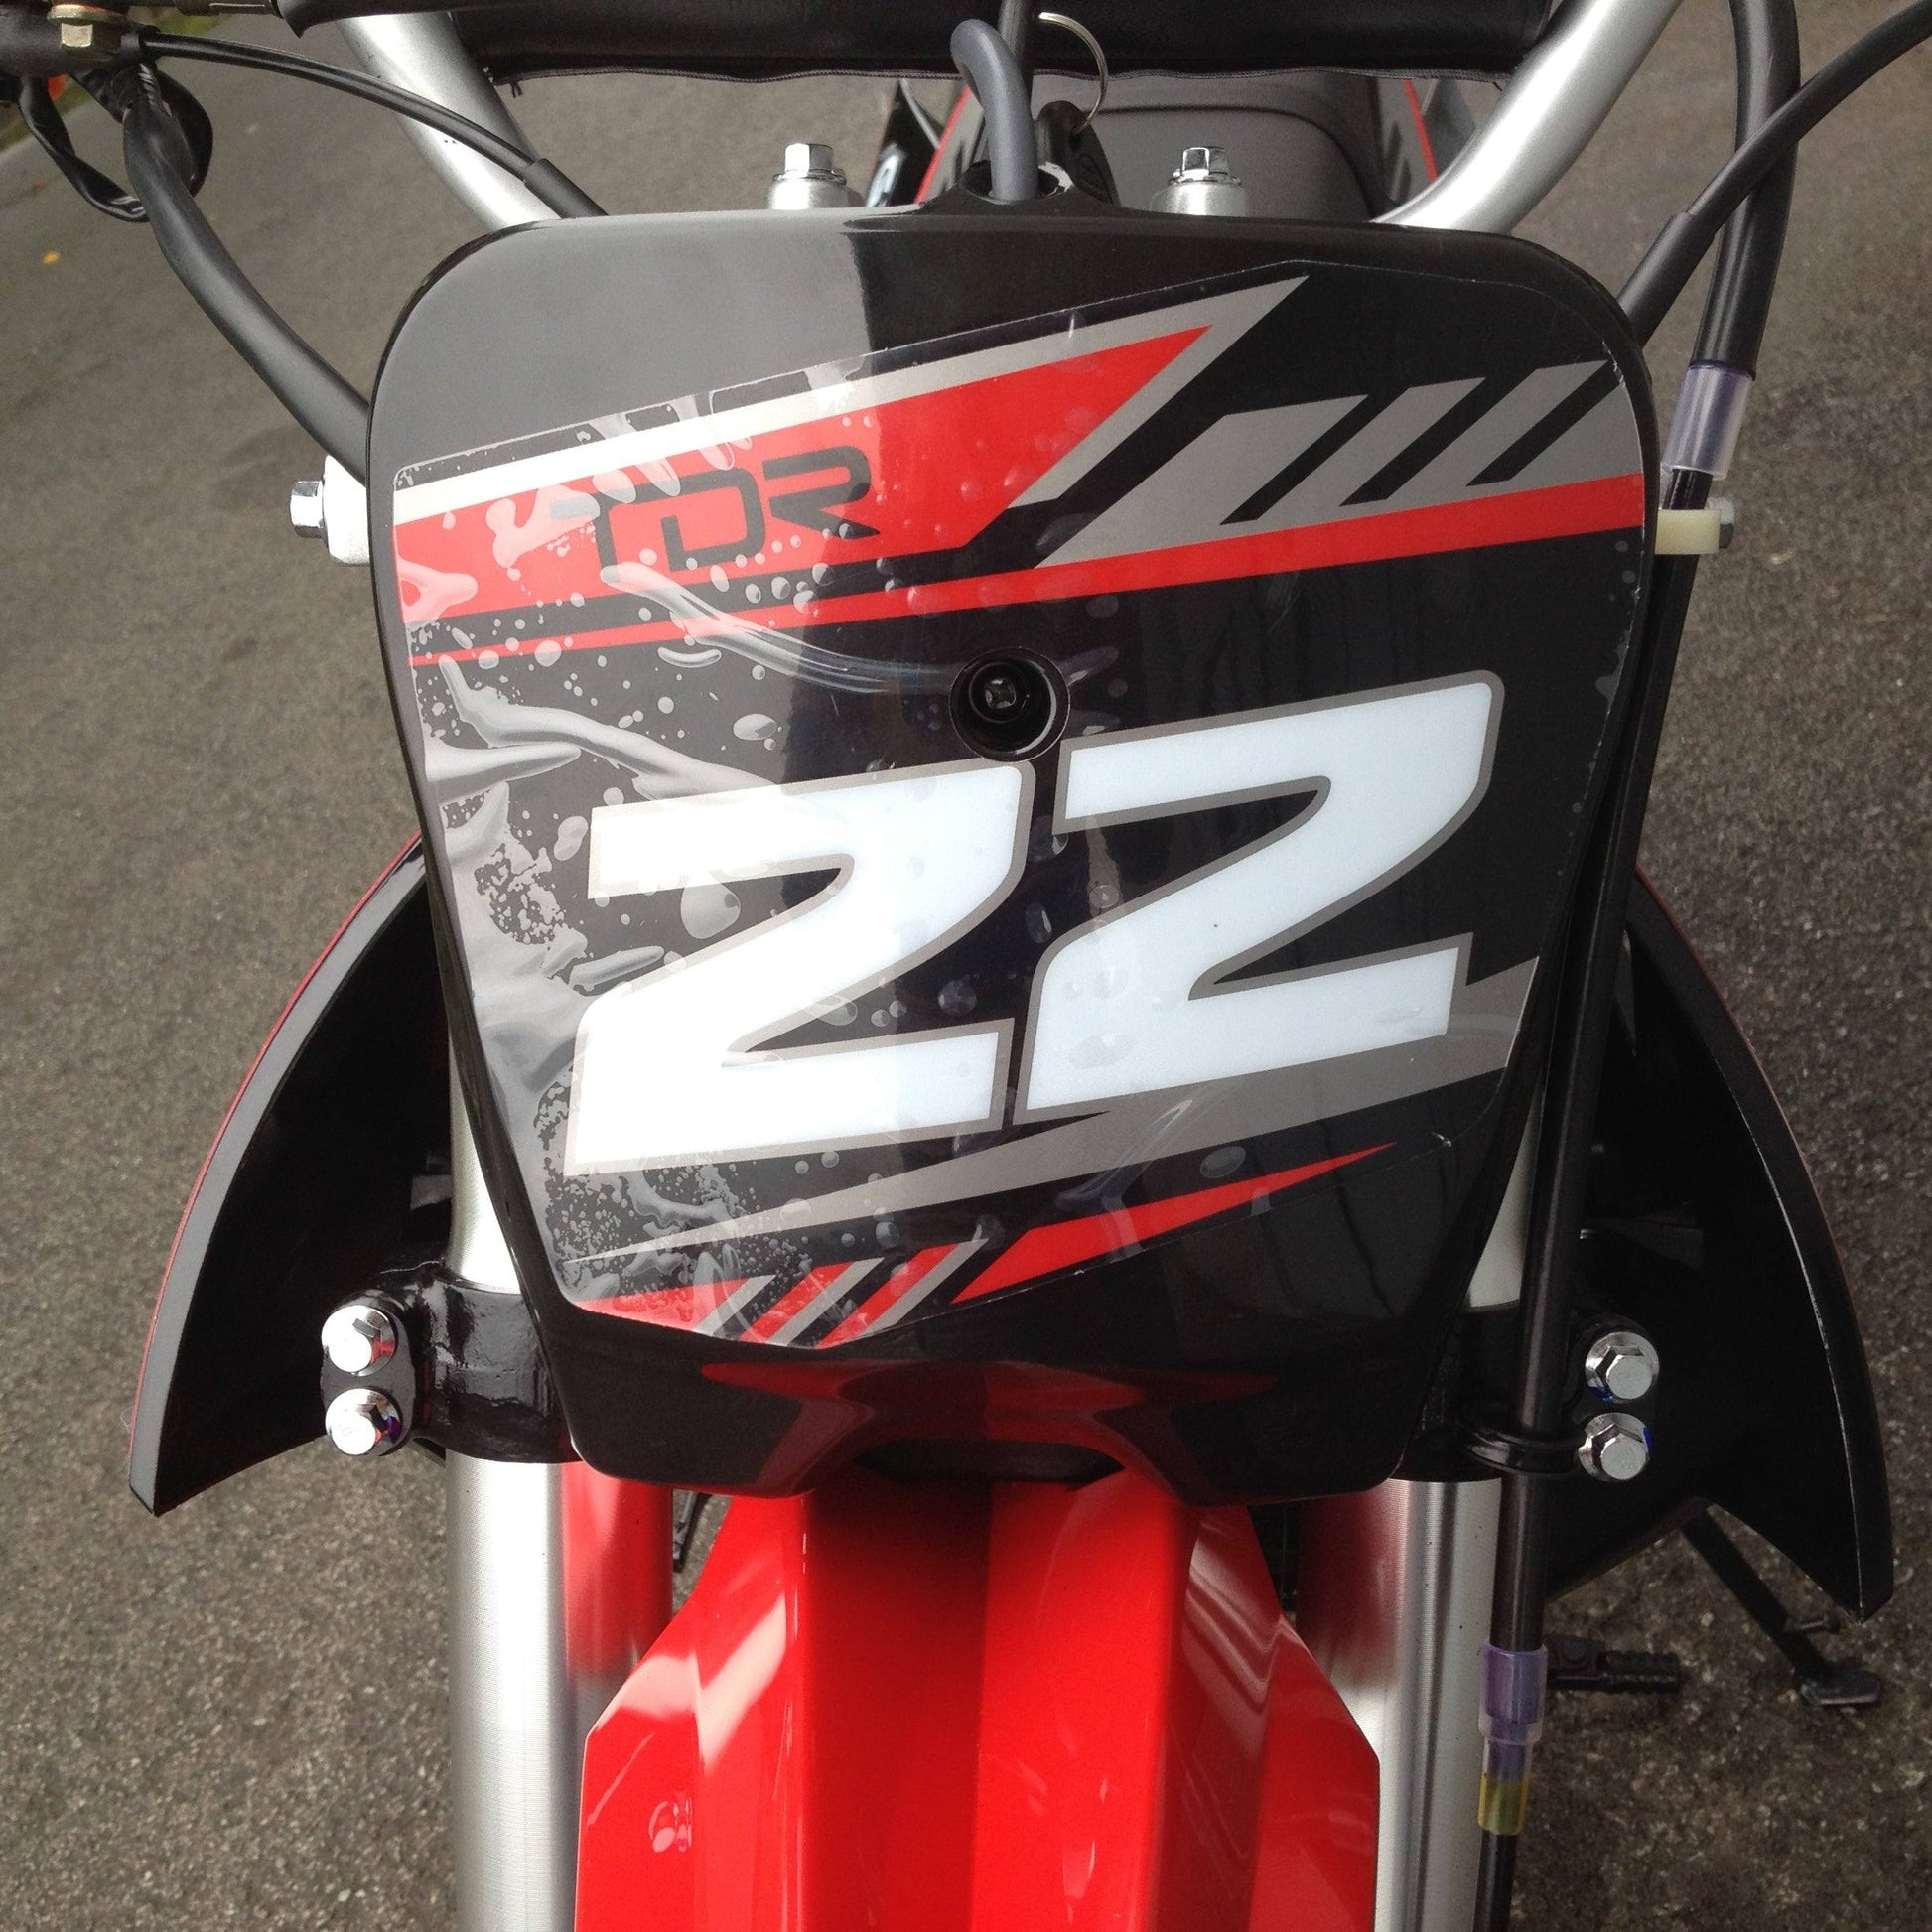 TDR GY 200cc Red Dirt Bike - 4 Stroke Air Cooled Electric/Kick Start - TDRMOTO